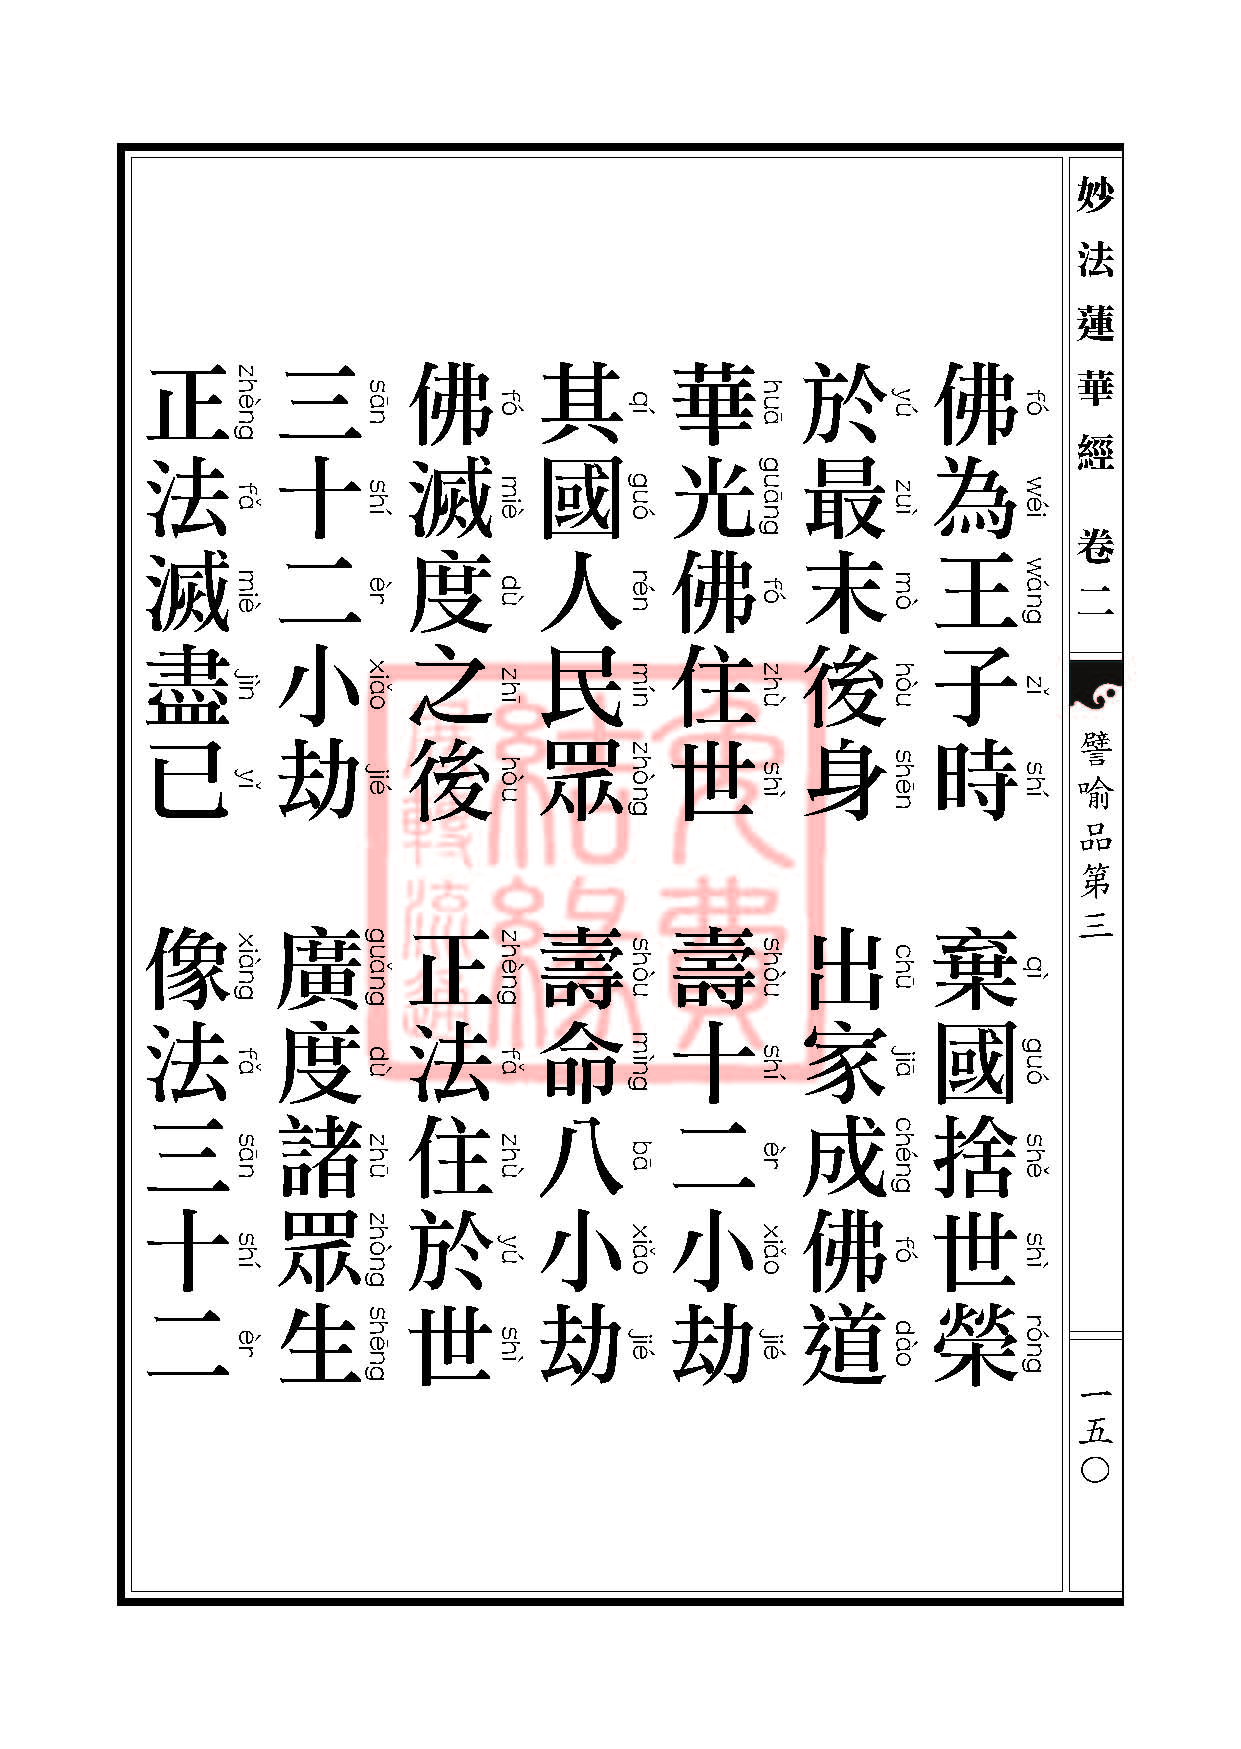 Book_FHJ_HK-A6-PY_Web_ҳ_150.jpg